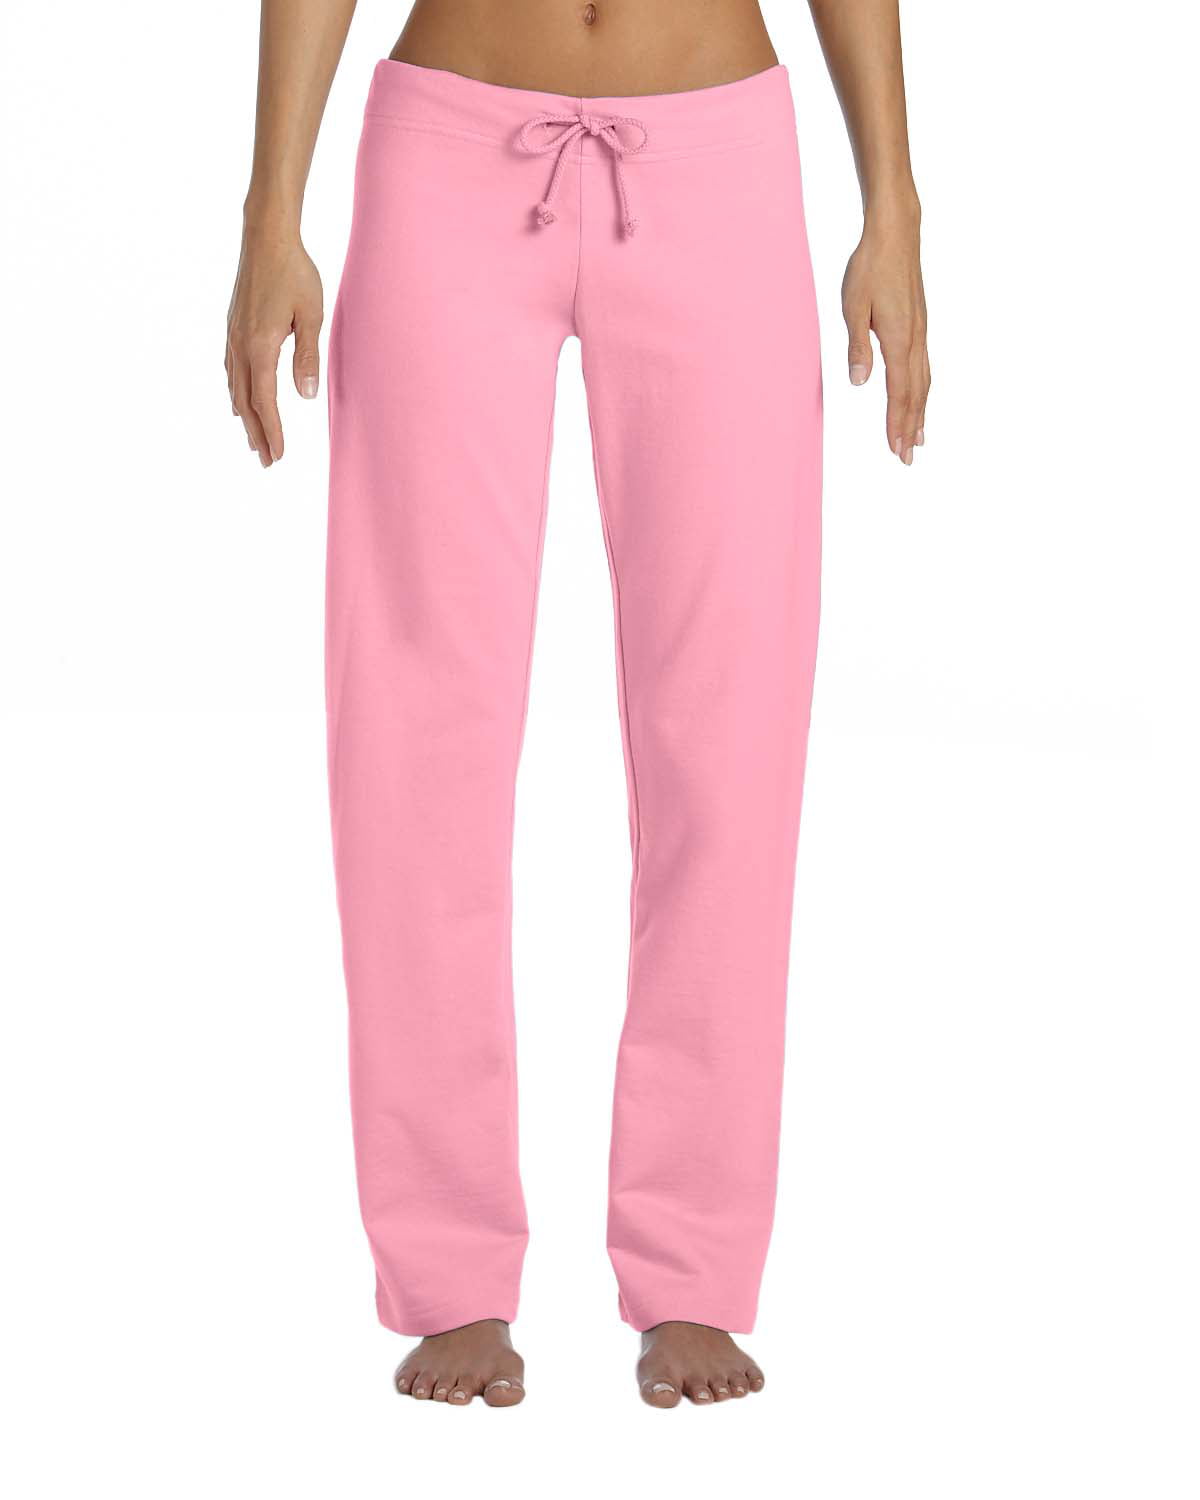 Bella Sweatpants 7017 Women's Junior Fit Fleece Straight Leg - Walmart.com